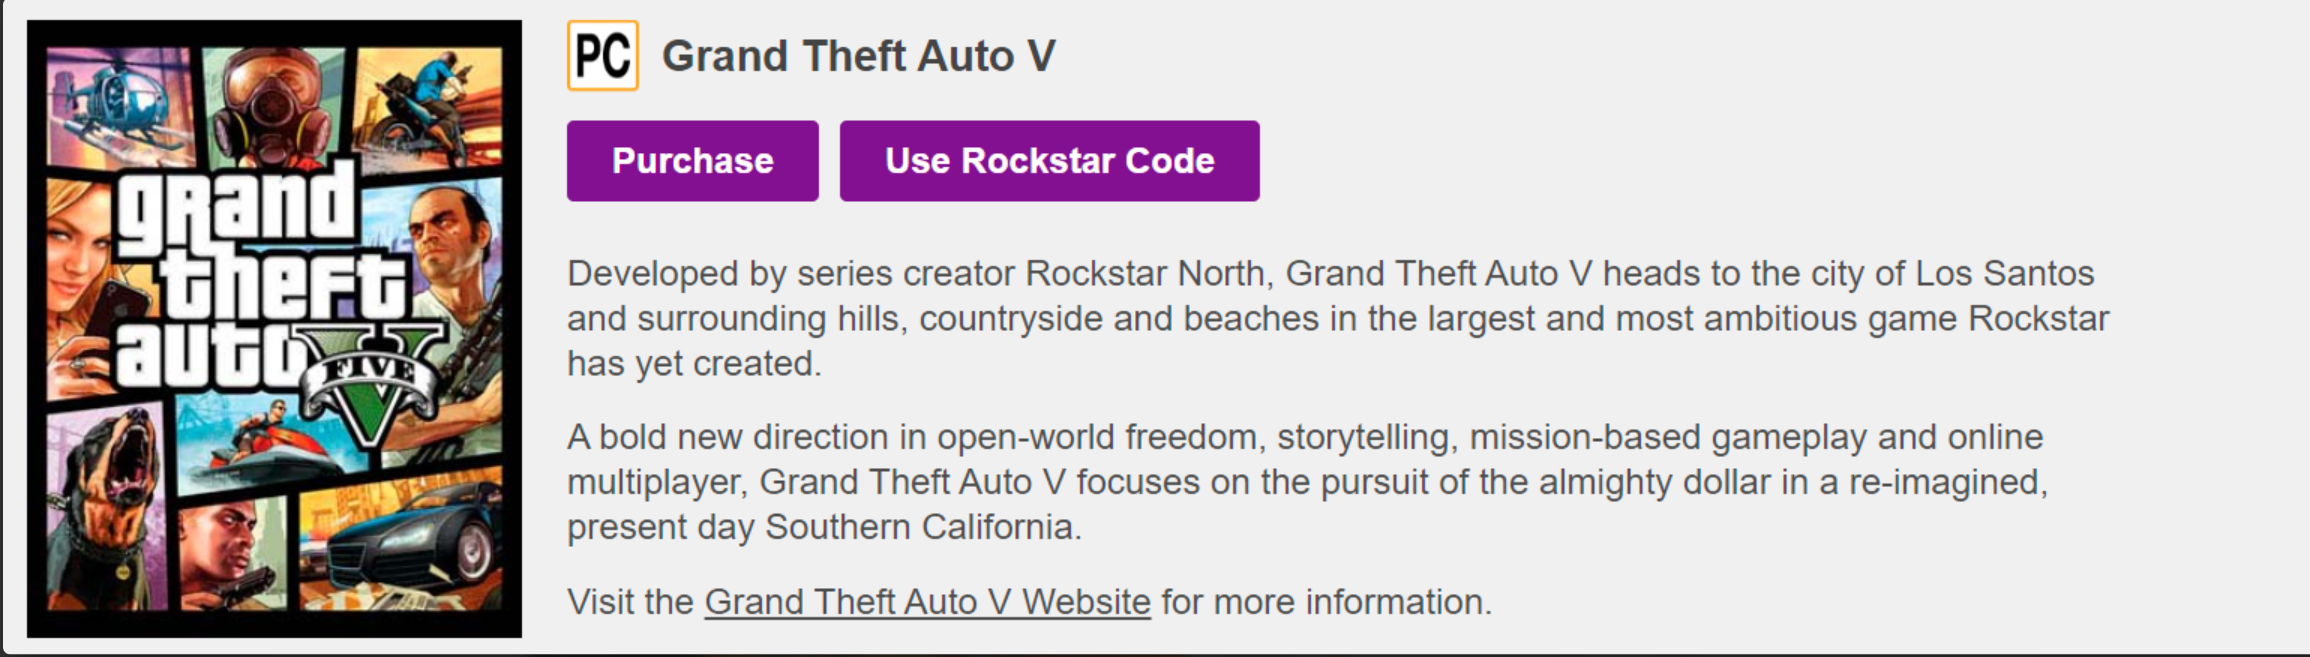 Код активации Rockstar GTA 5. GTA 4 код активации. Код 1 рокстар. Какой код активации Rockstar для ГТА 5. Введите код активации rockstar